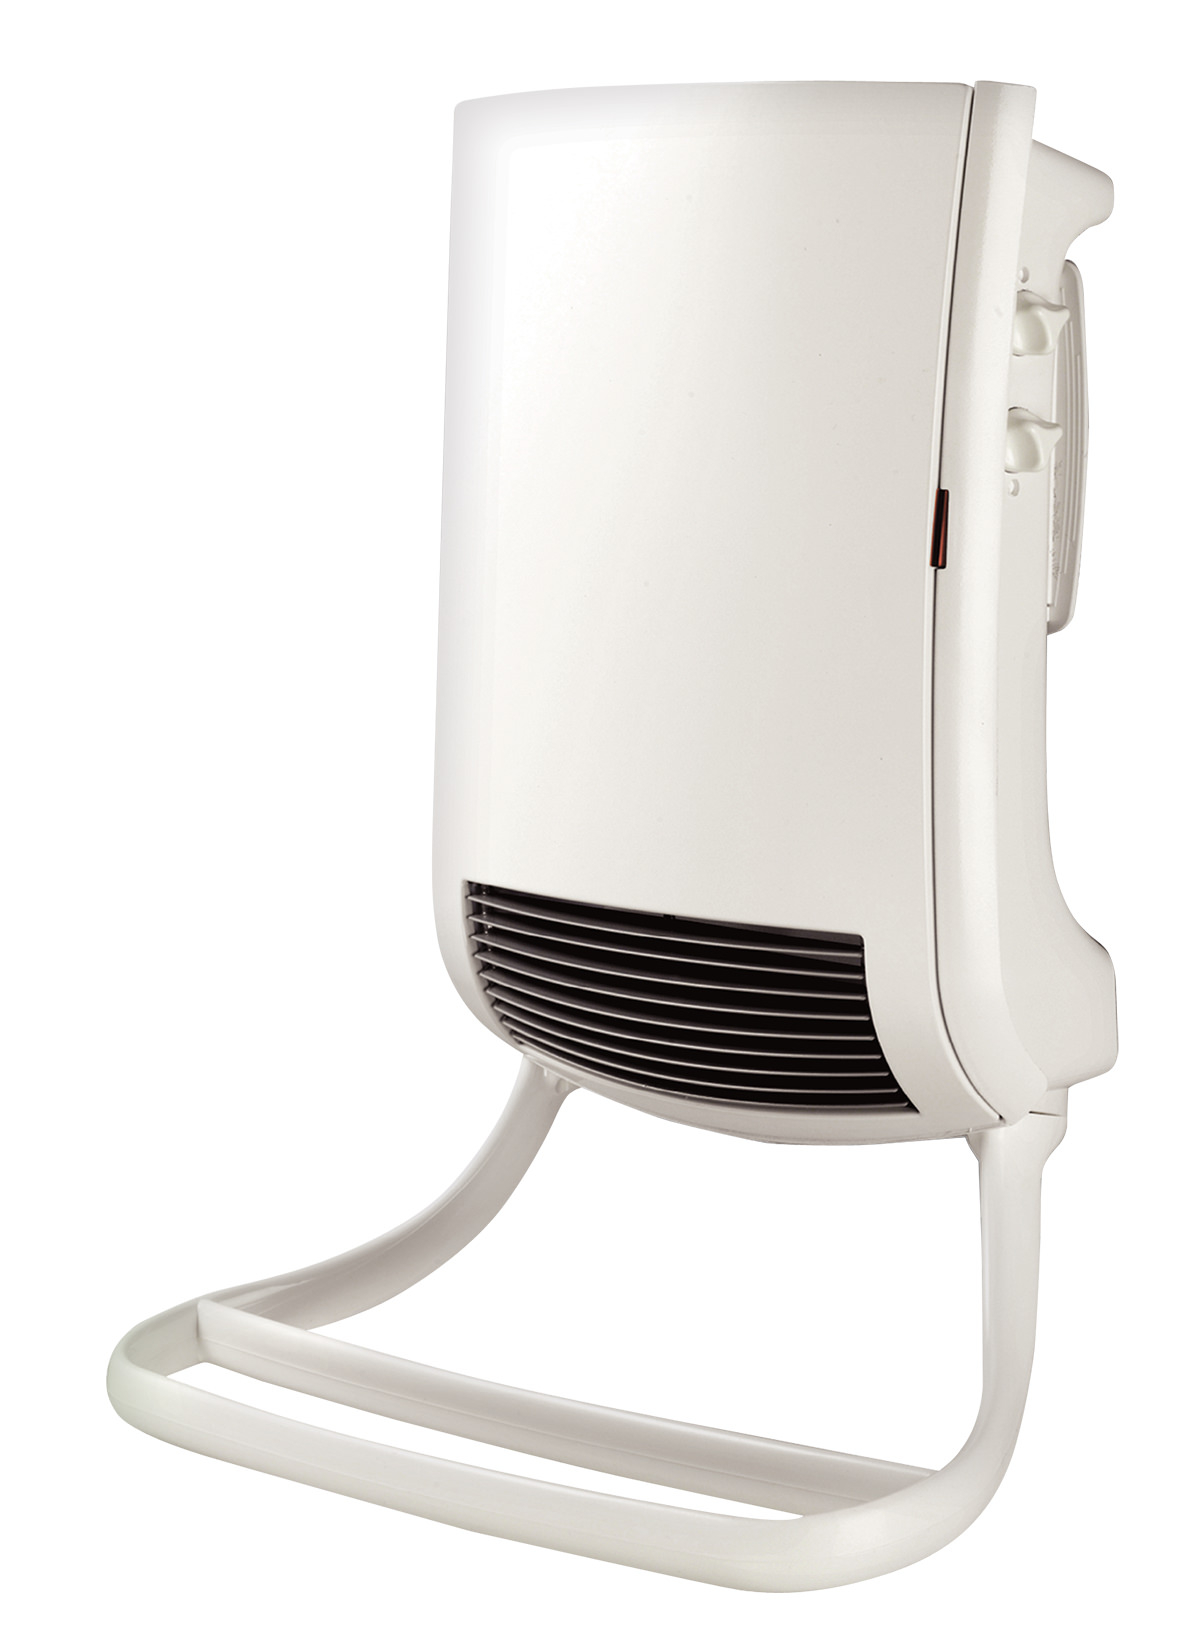 Stelpro Aubh1802 White Uniwatt Bathroom Fan Heater With Towel Holder Bar Walmart pertaining to size 1188 X 1644